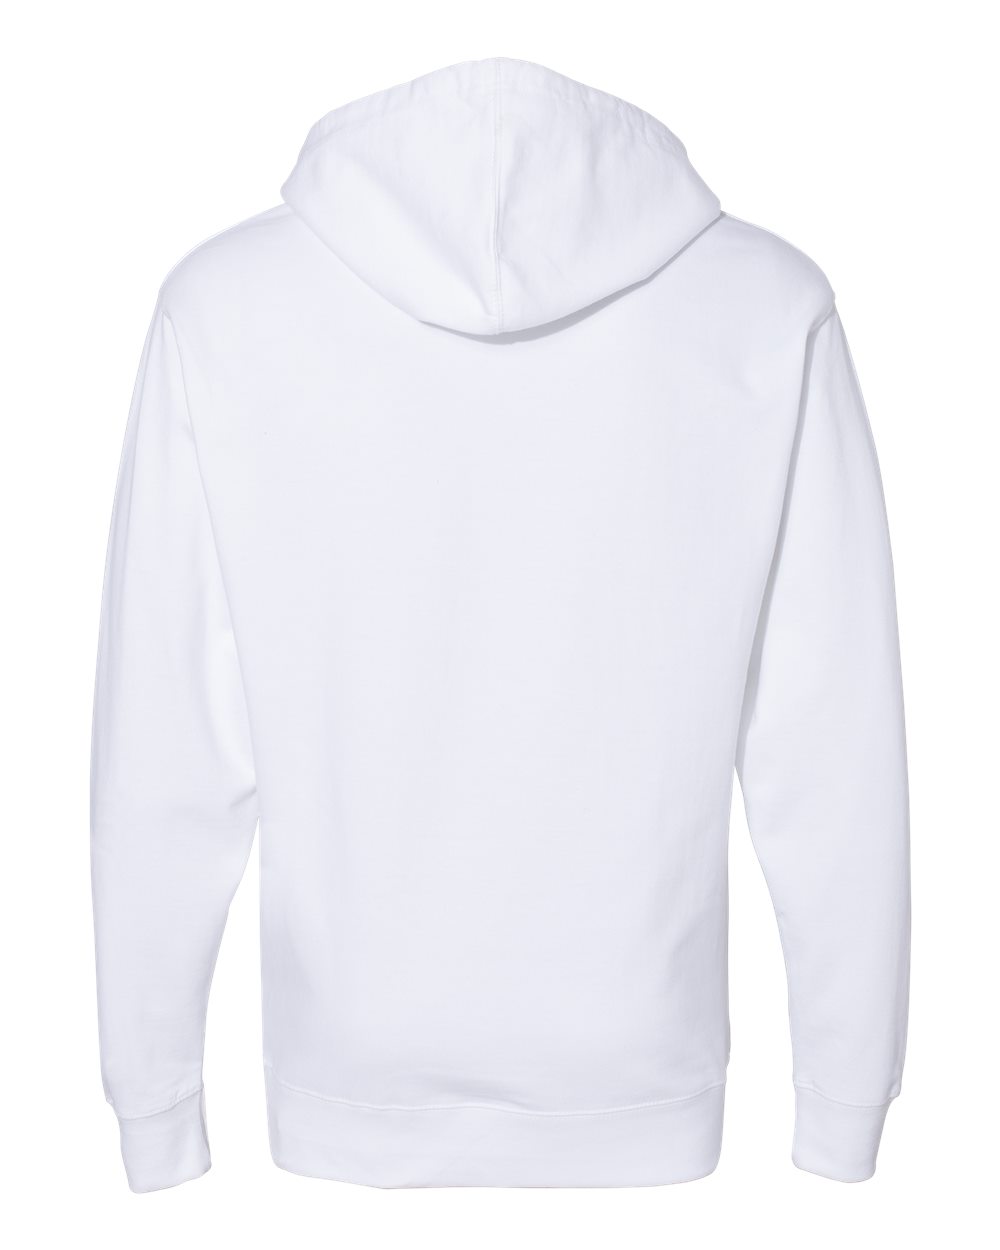 Independent Trading Co. Men's Midweight Full-Zip Hooded Sweatshirt